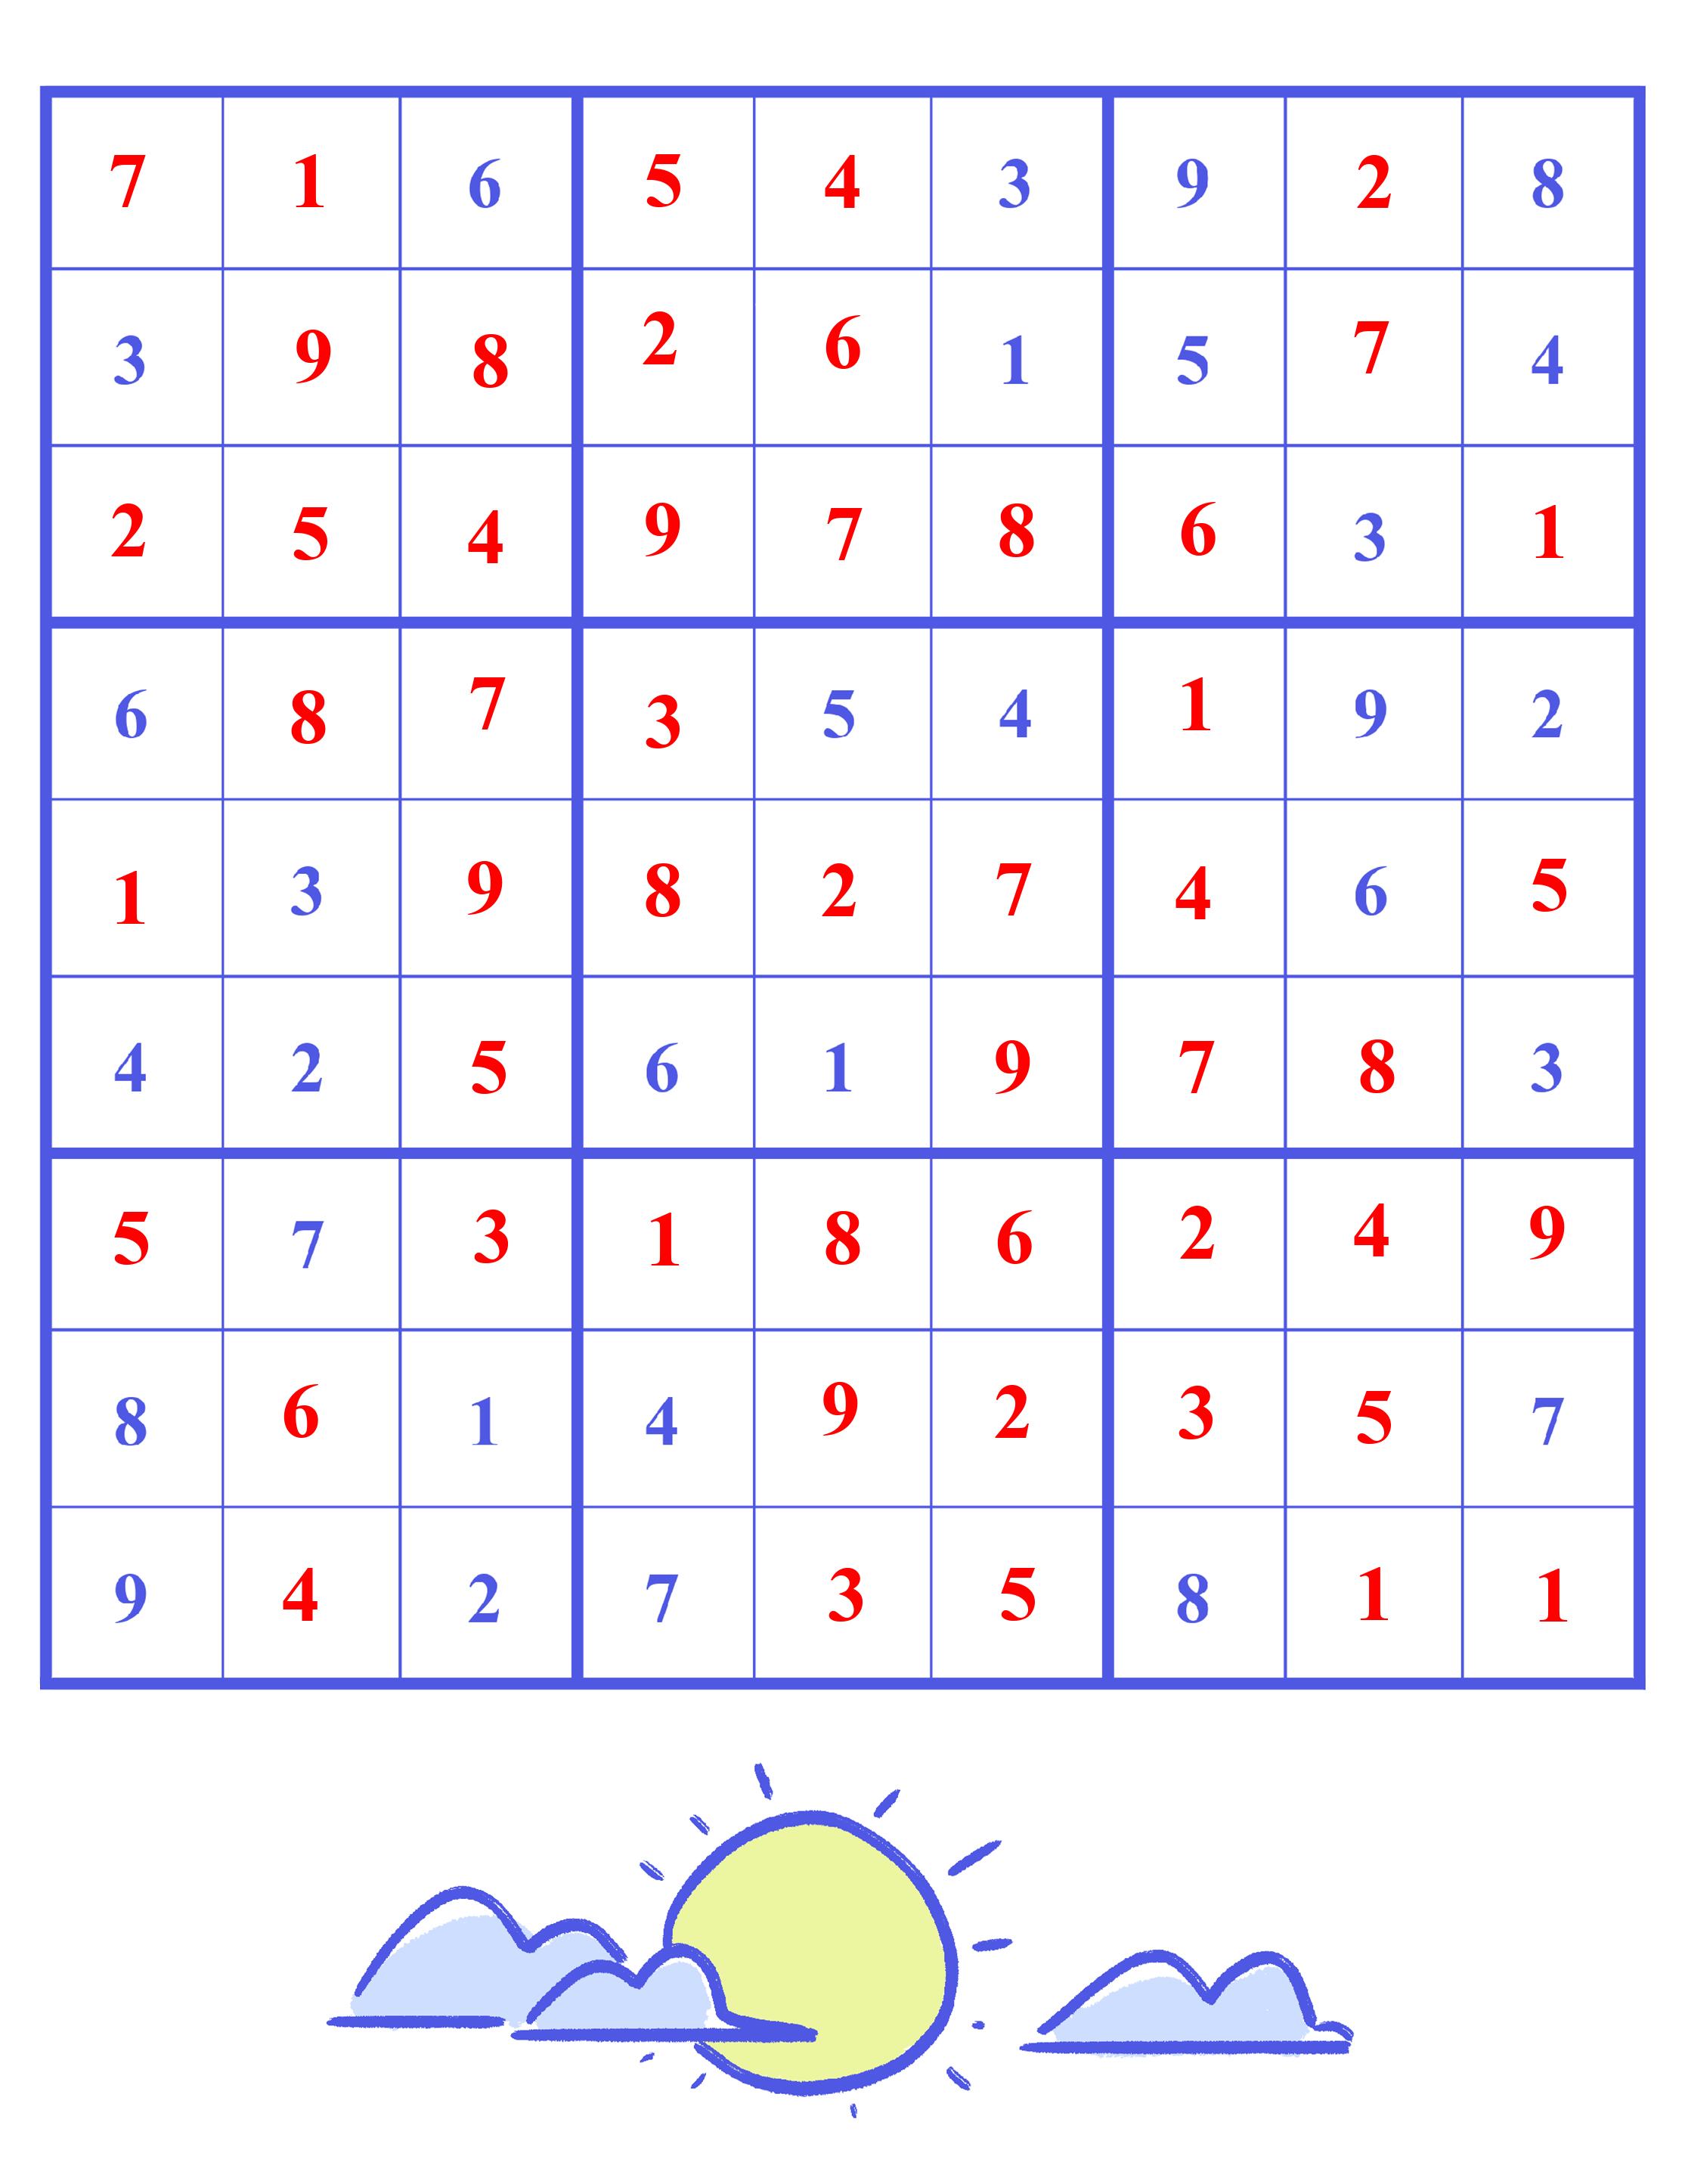 June 17th Sudoku Solution